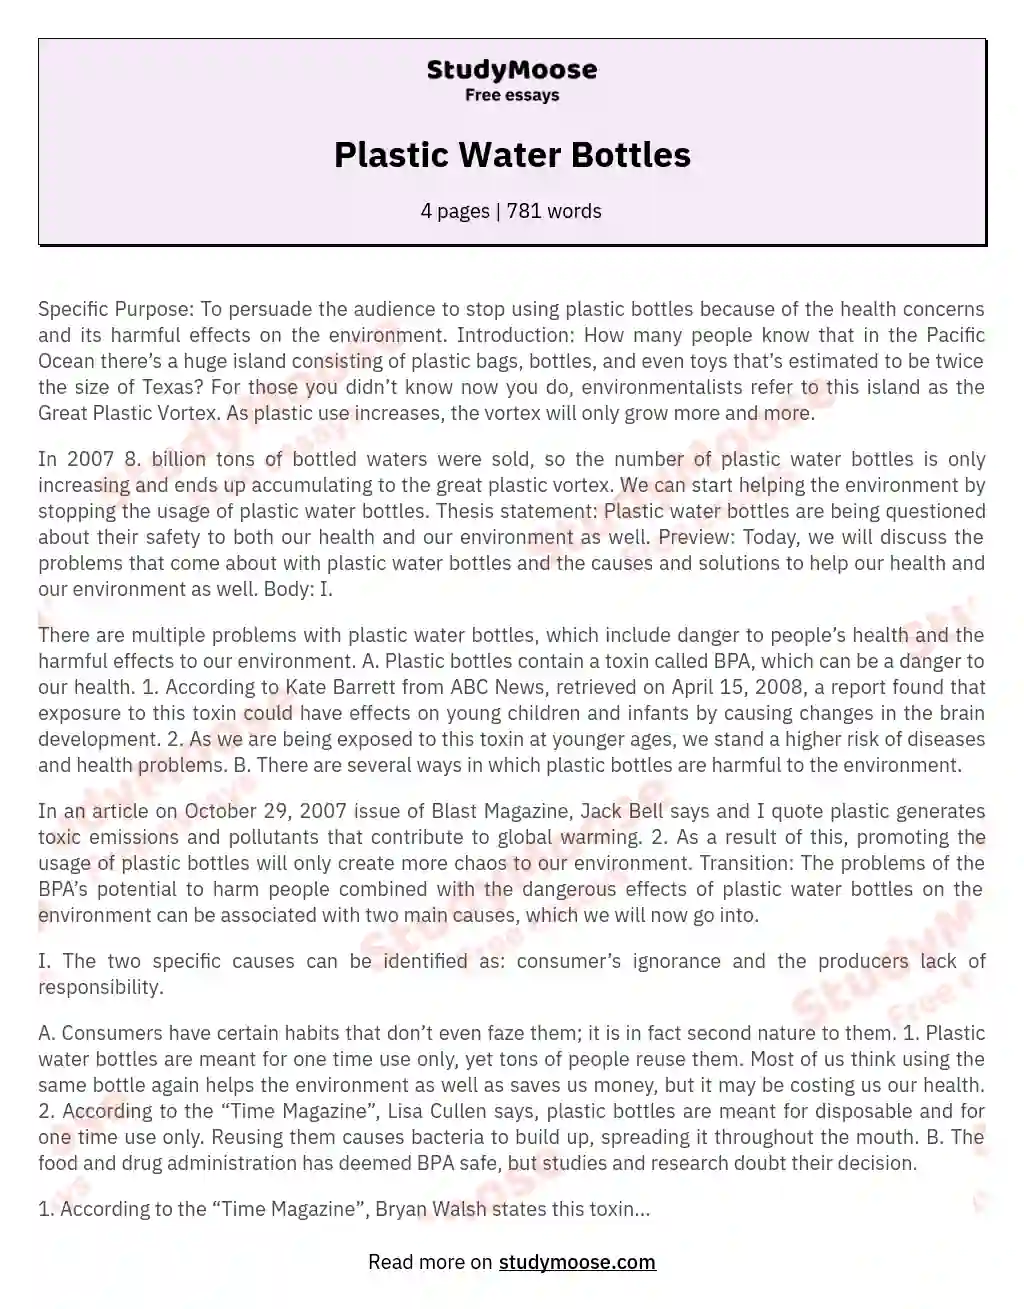 Plastic Water Bottles essay